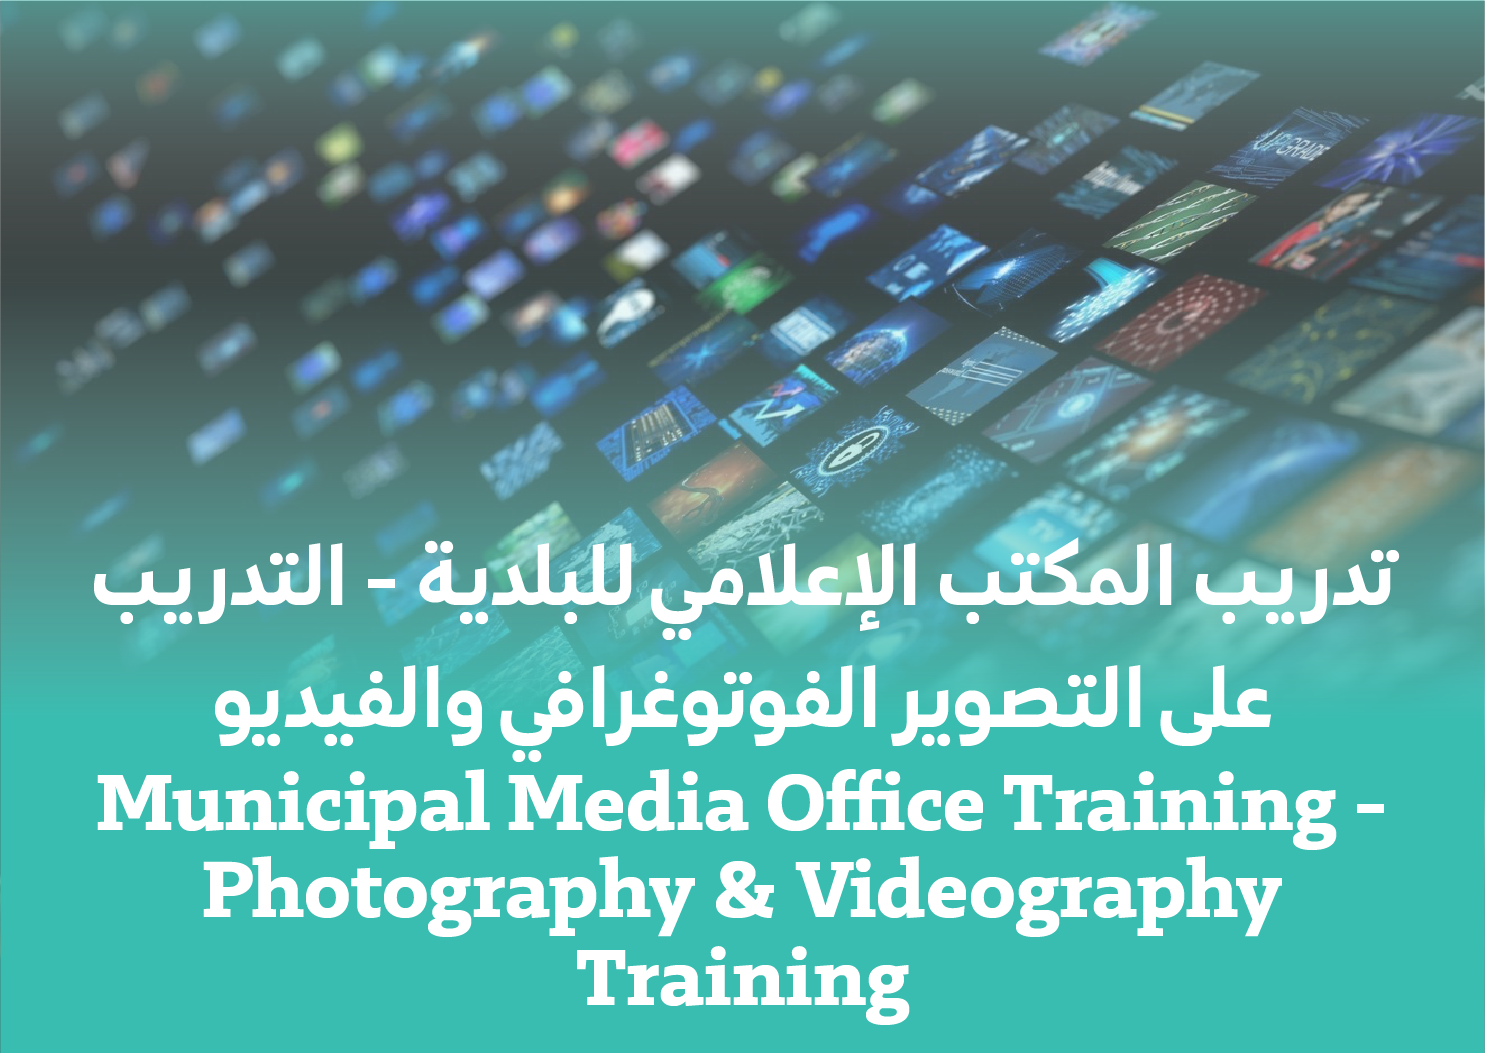 Municipal Media Office Training - Photography & Videography Training